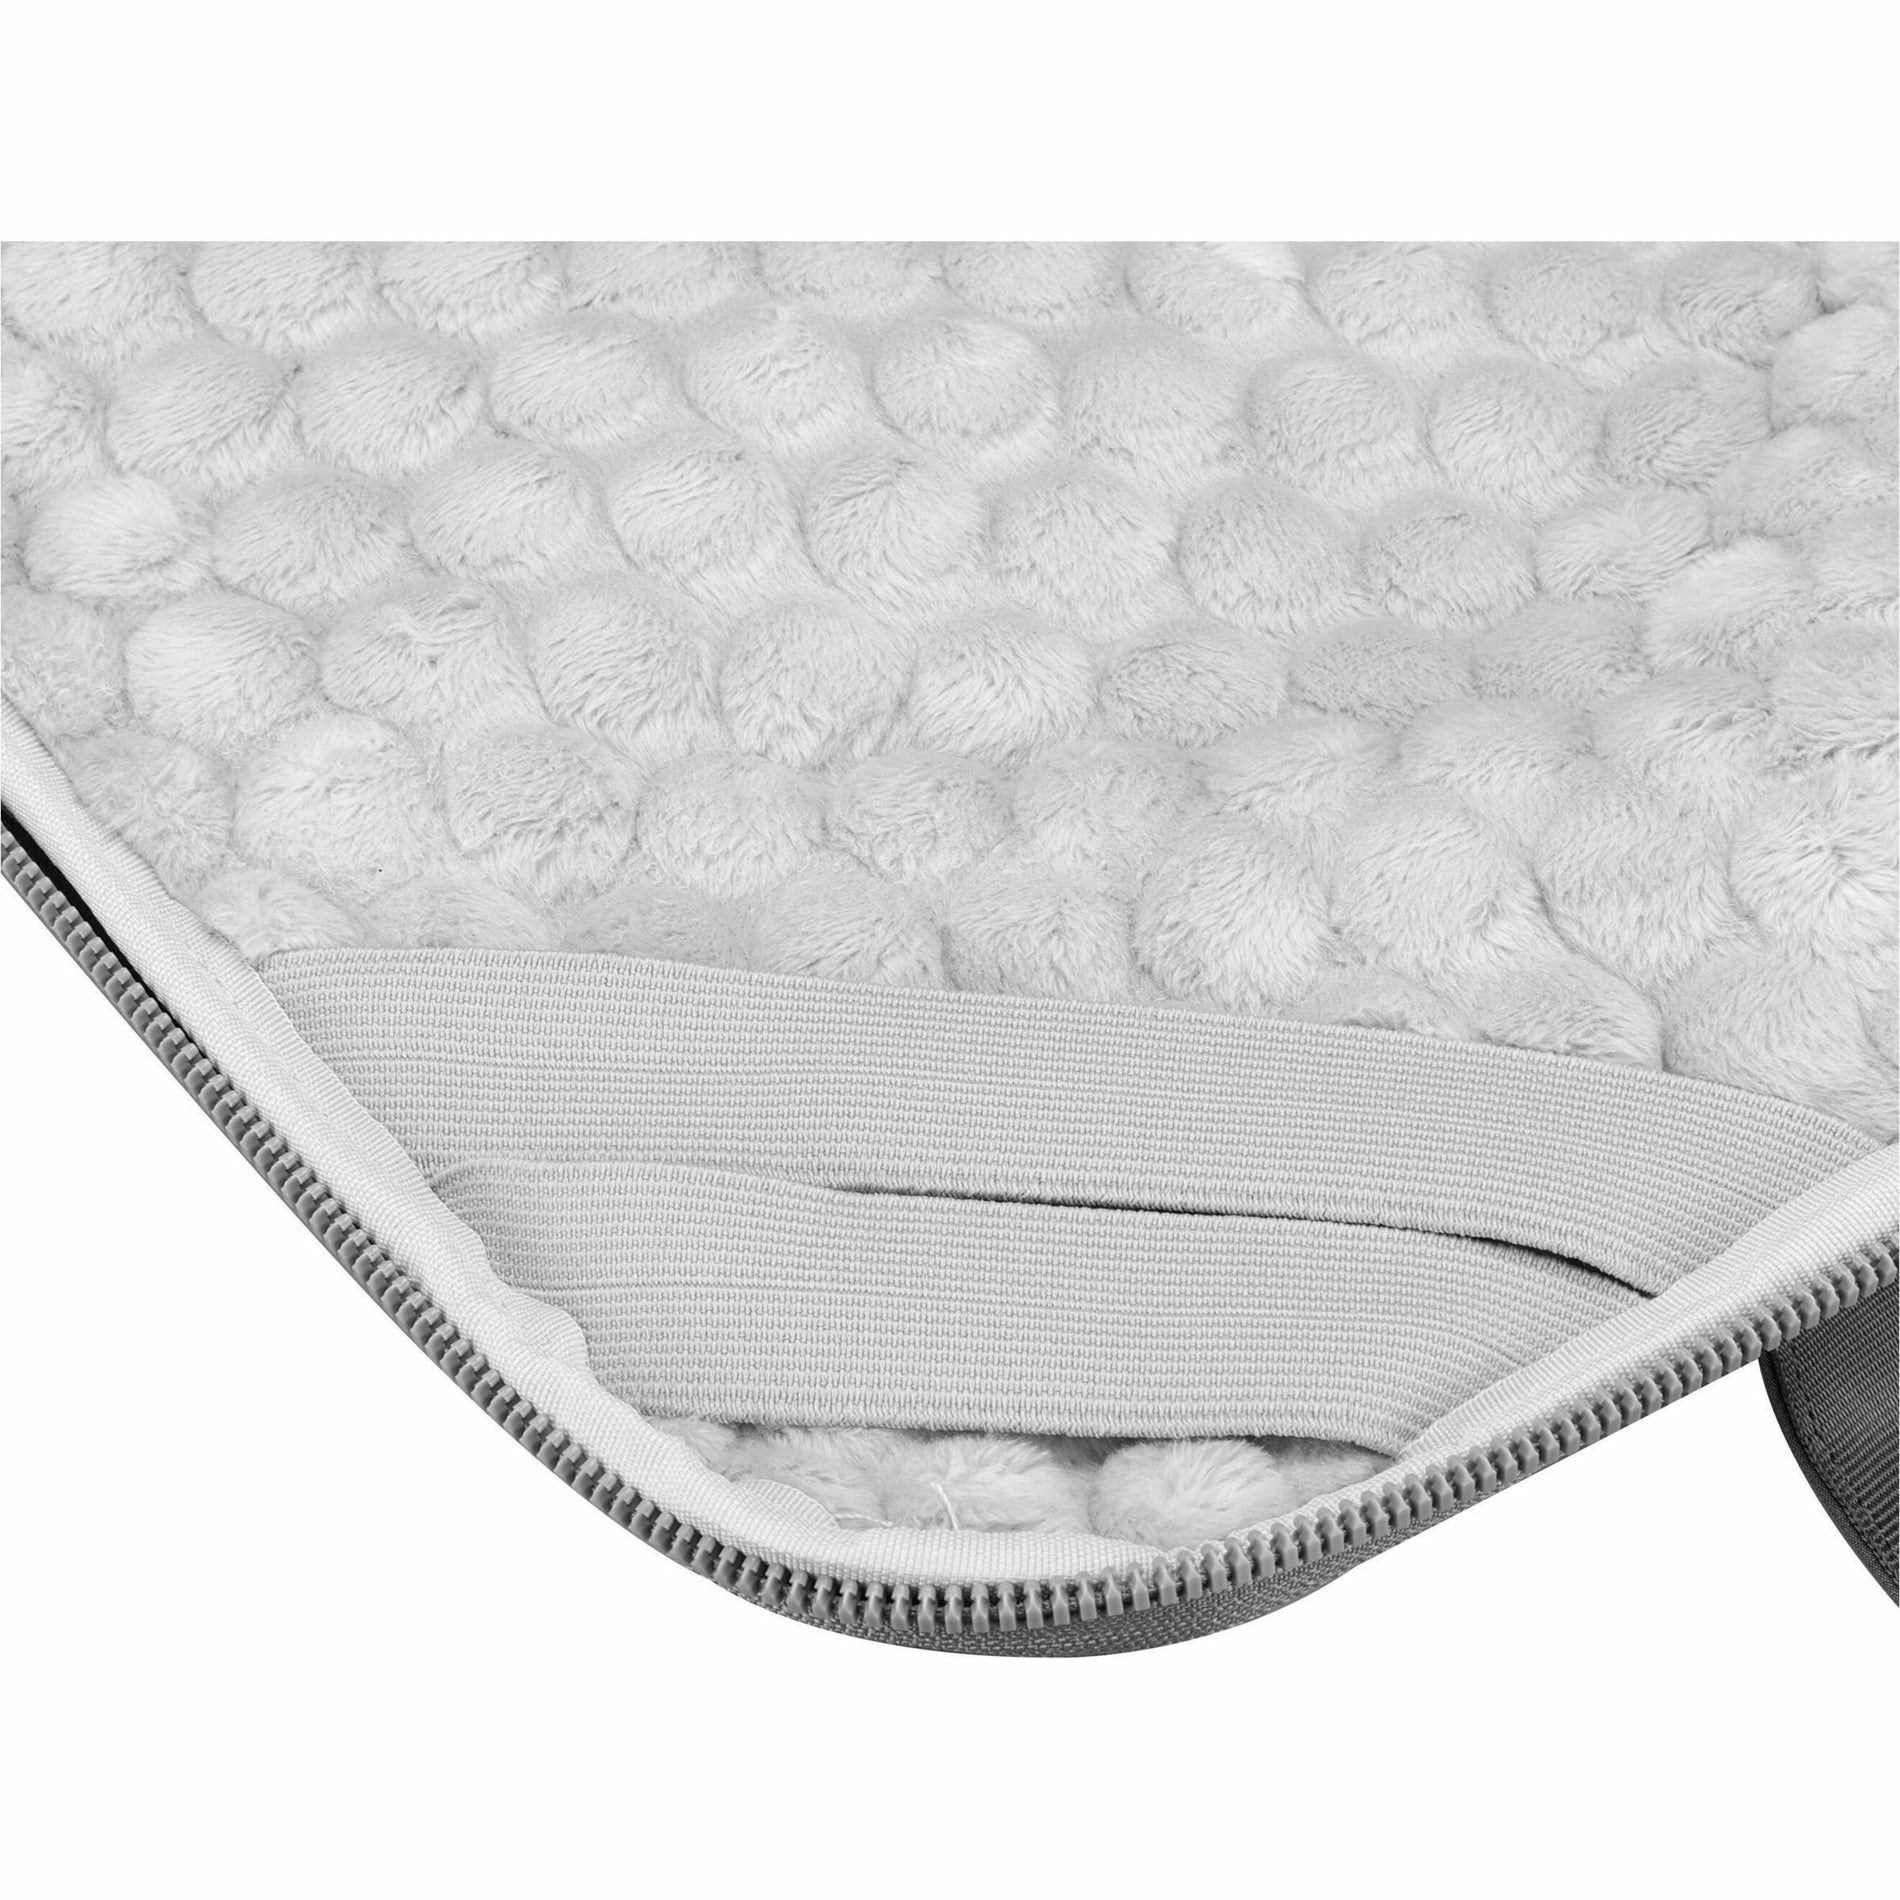 Swissdigital Design SD8522-04 Notebook Case, Sleeve for MacBook Pro, Gray